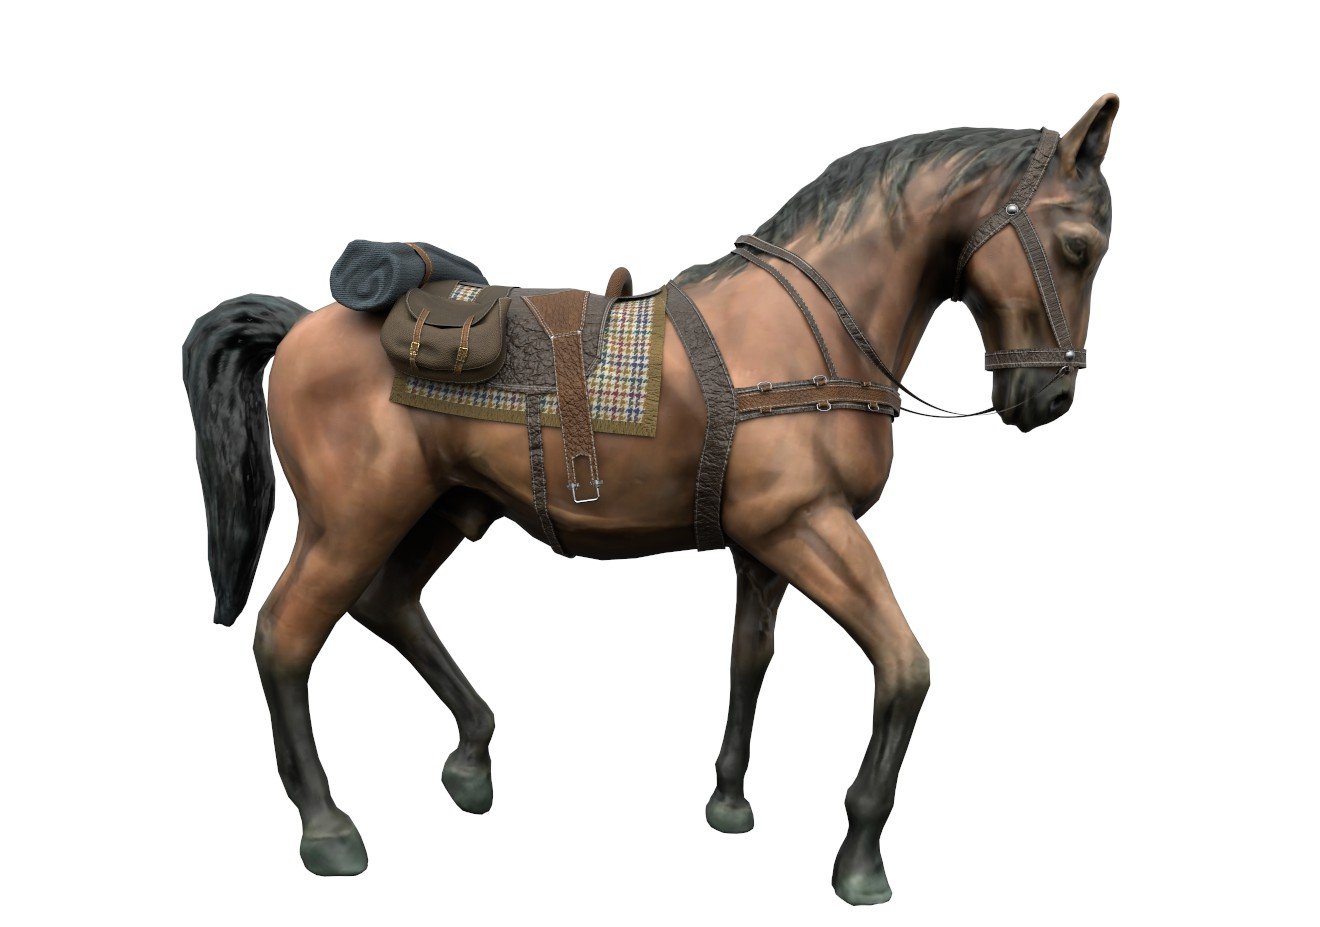 Desperado 馬の置物 model horse モデルホース 22000円 redpeacocks.co.uk